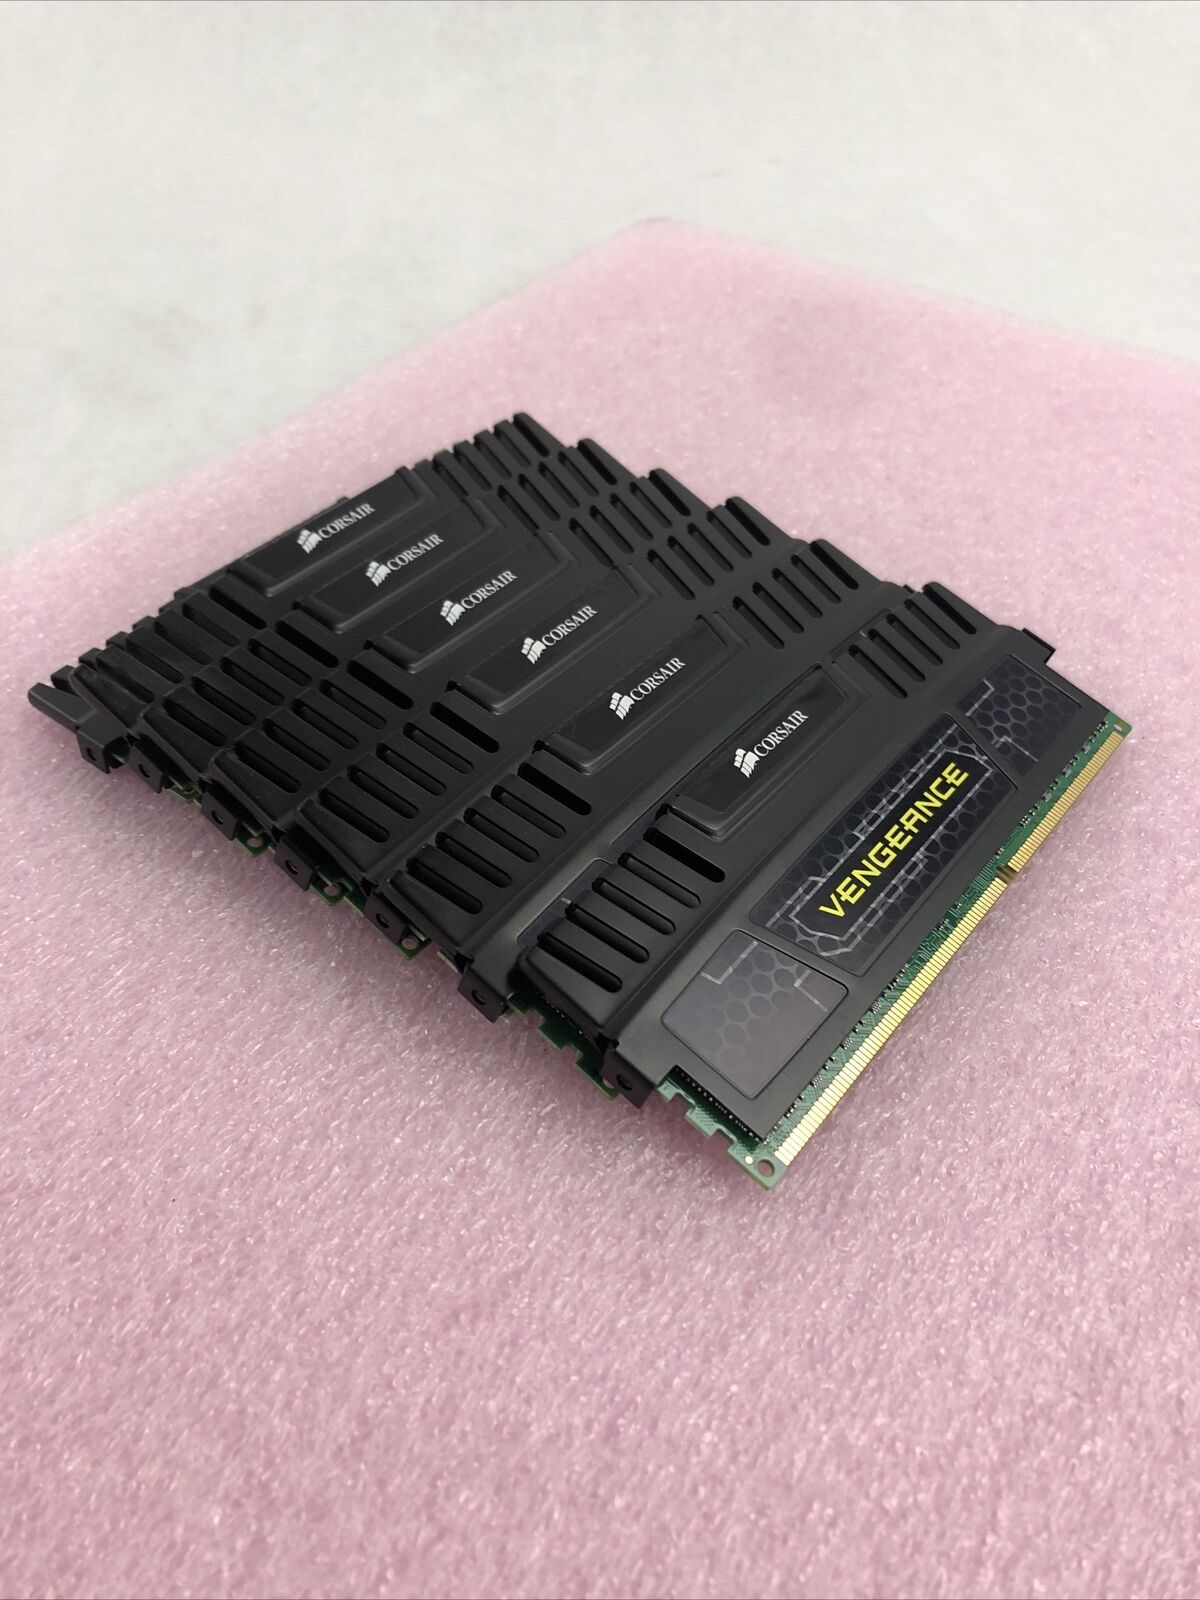 Corsair Vengeance DDR3 Lot of 7 8GB RAM Sticks CMZ32GX3M4X1600C10 